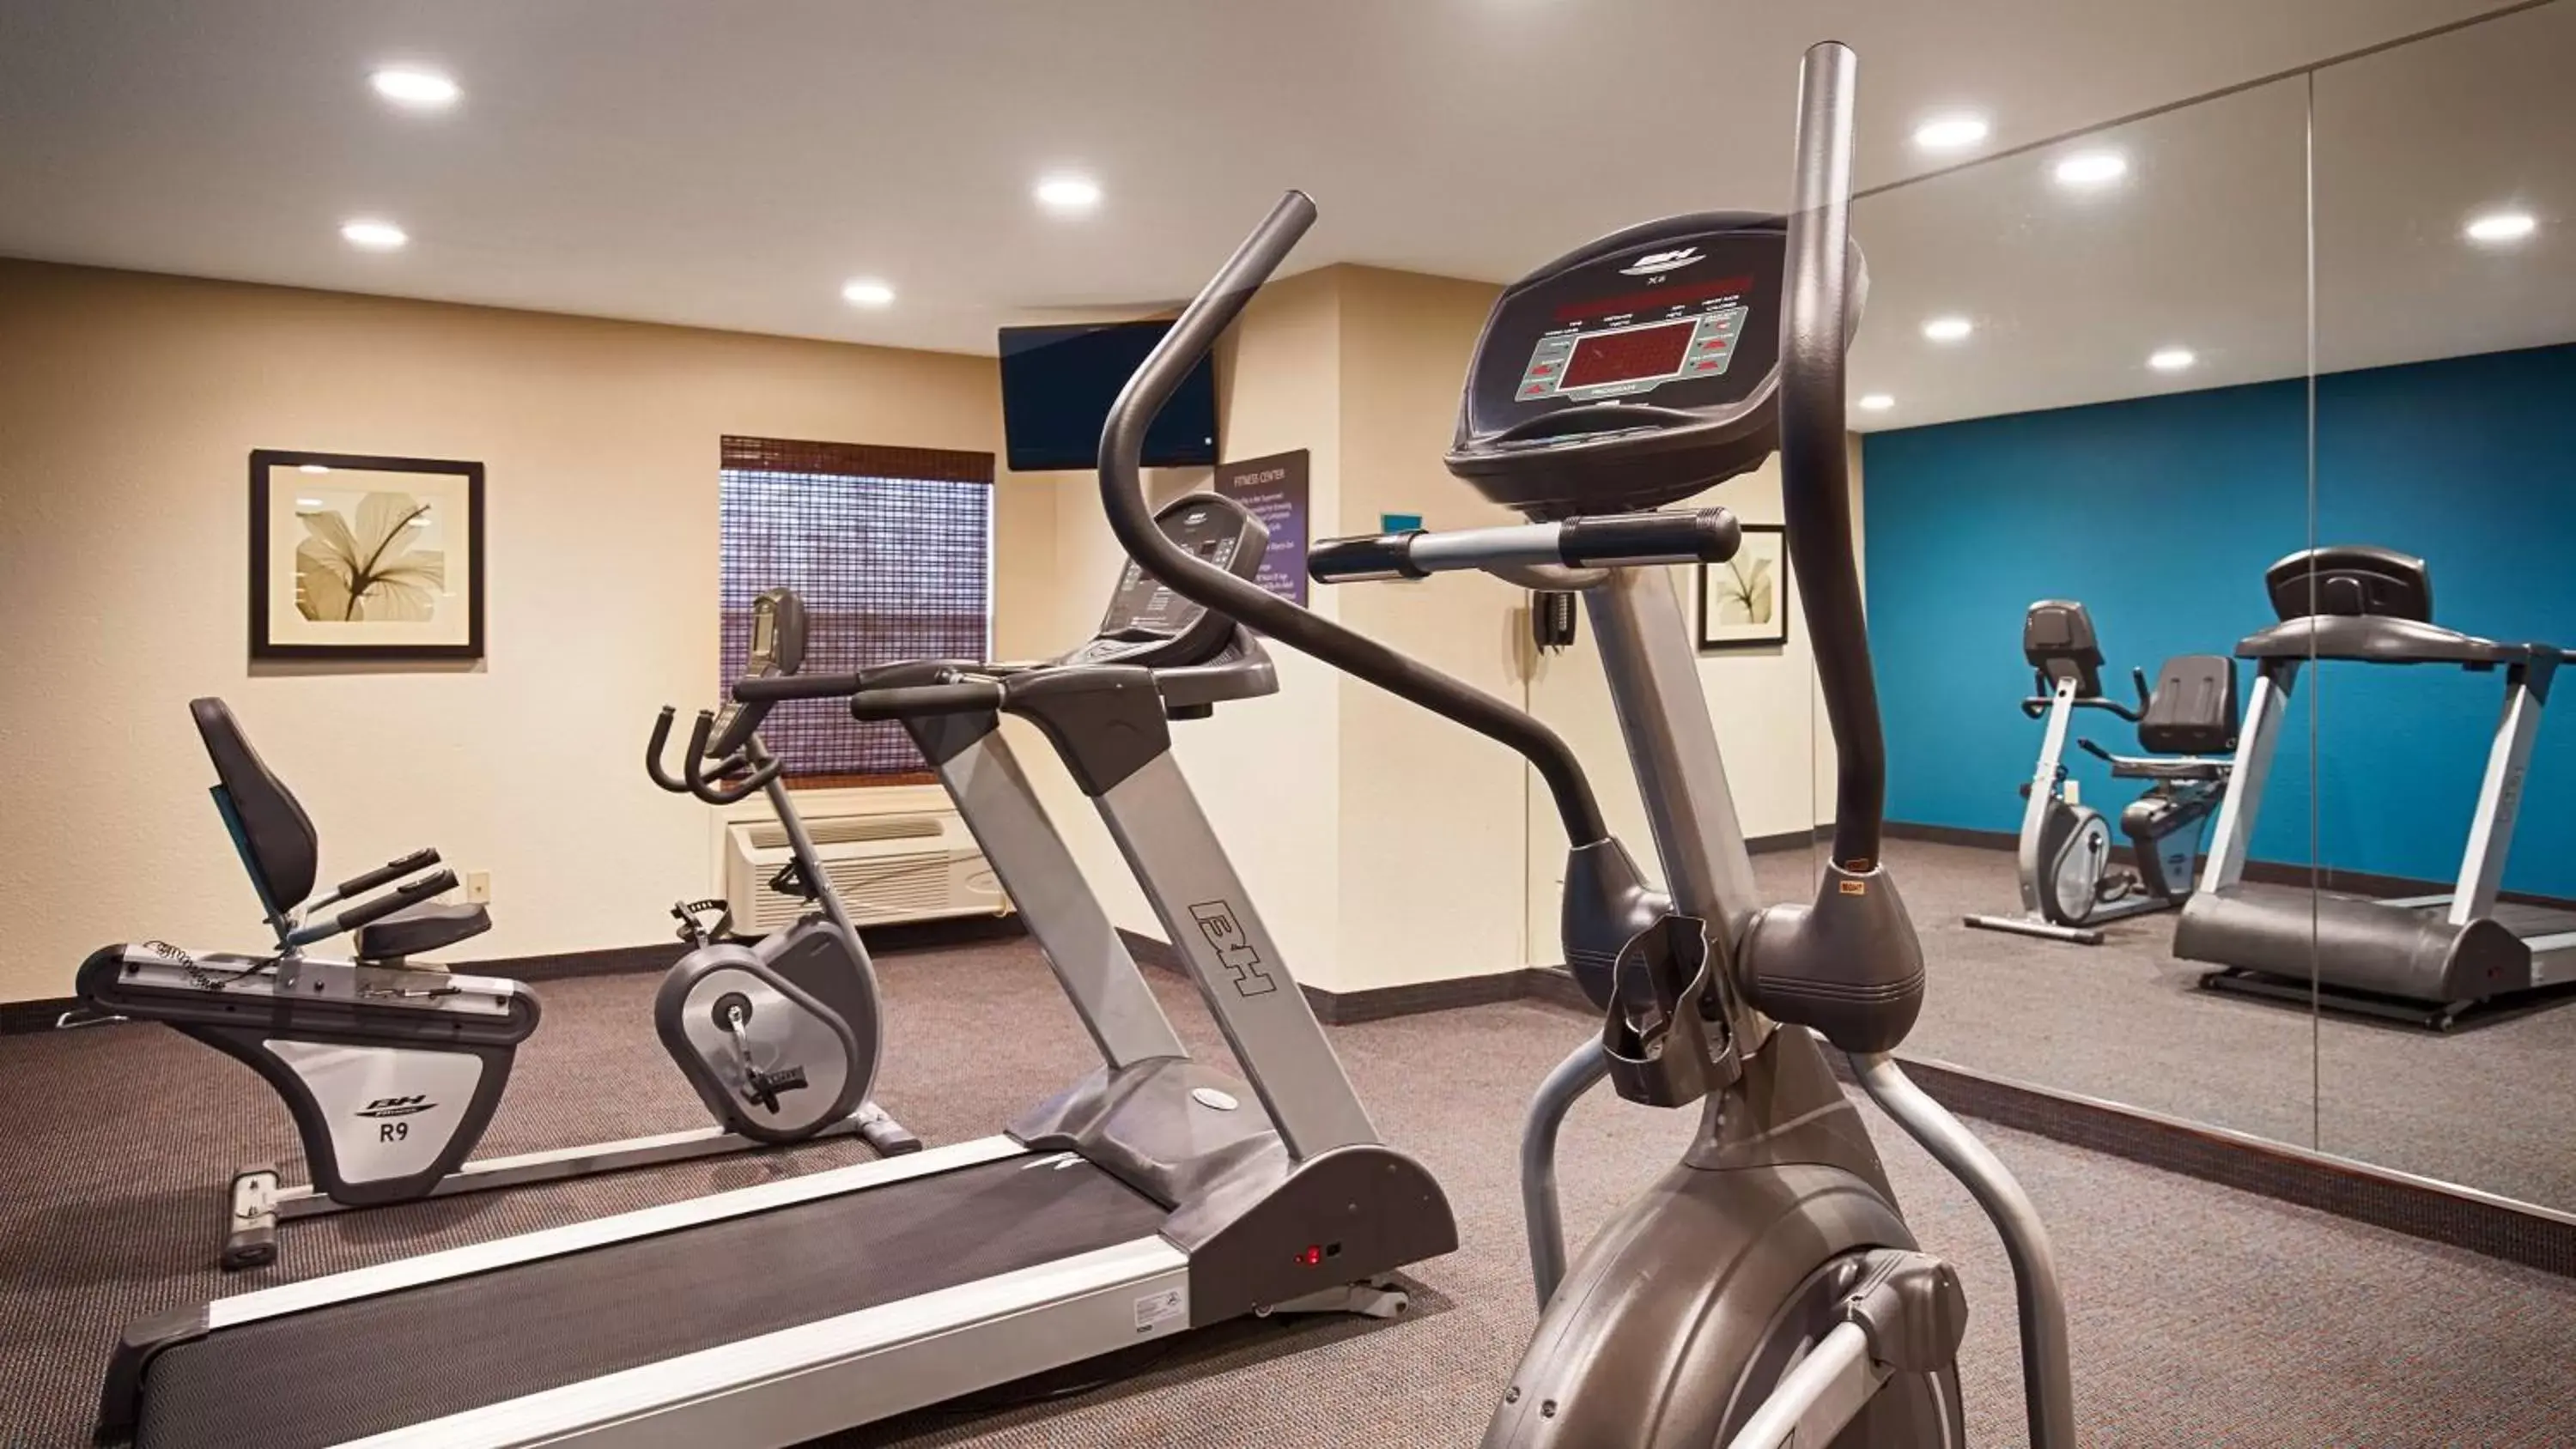 Fitness centre/facilities, Fitness Center/Facilities in Best Western Plus Lonoke Hotel